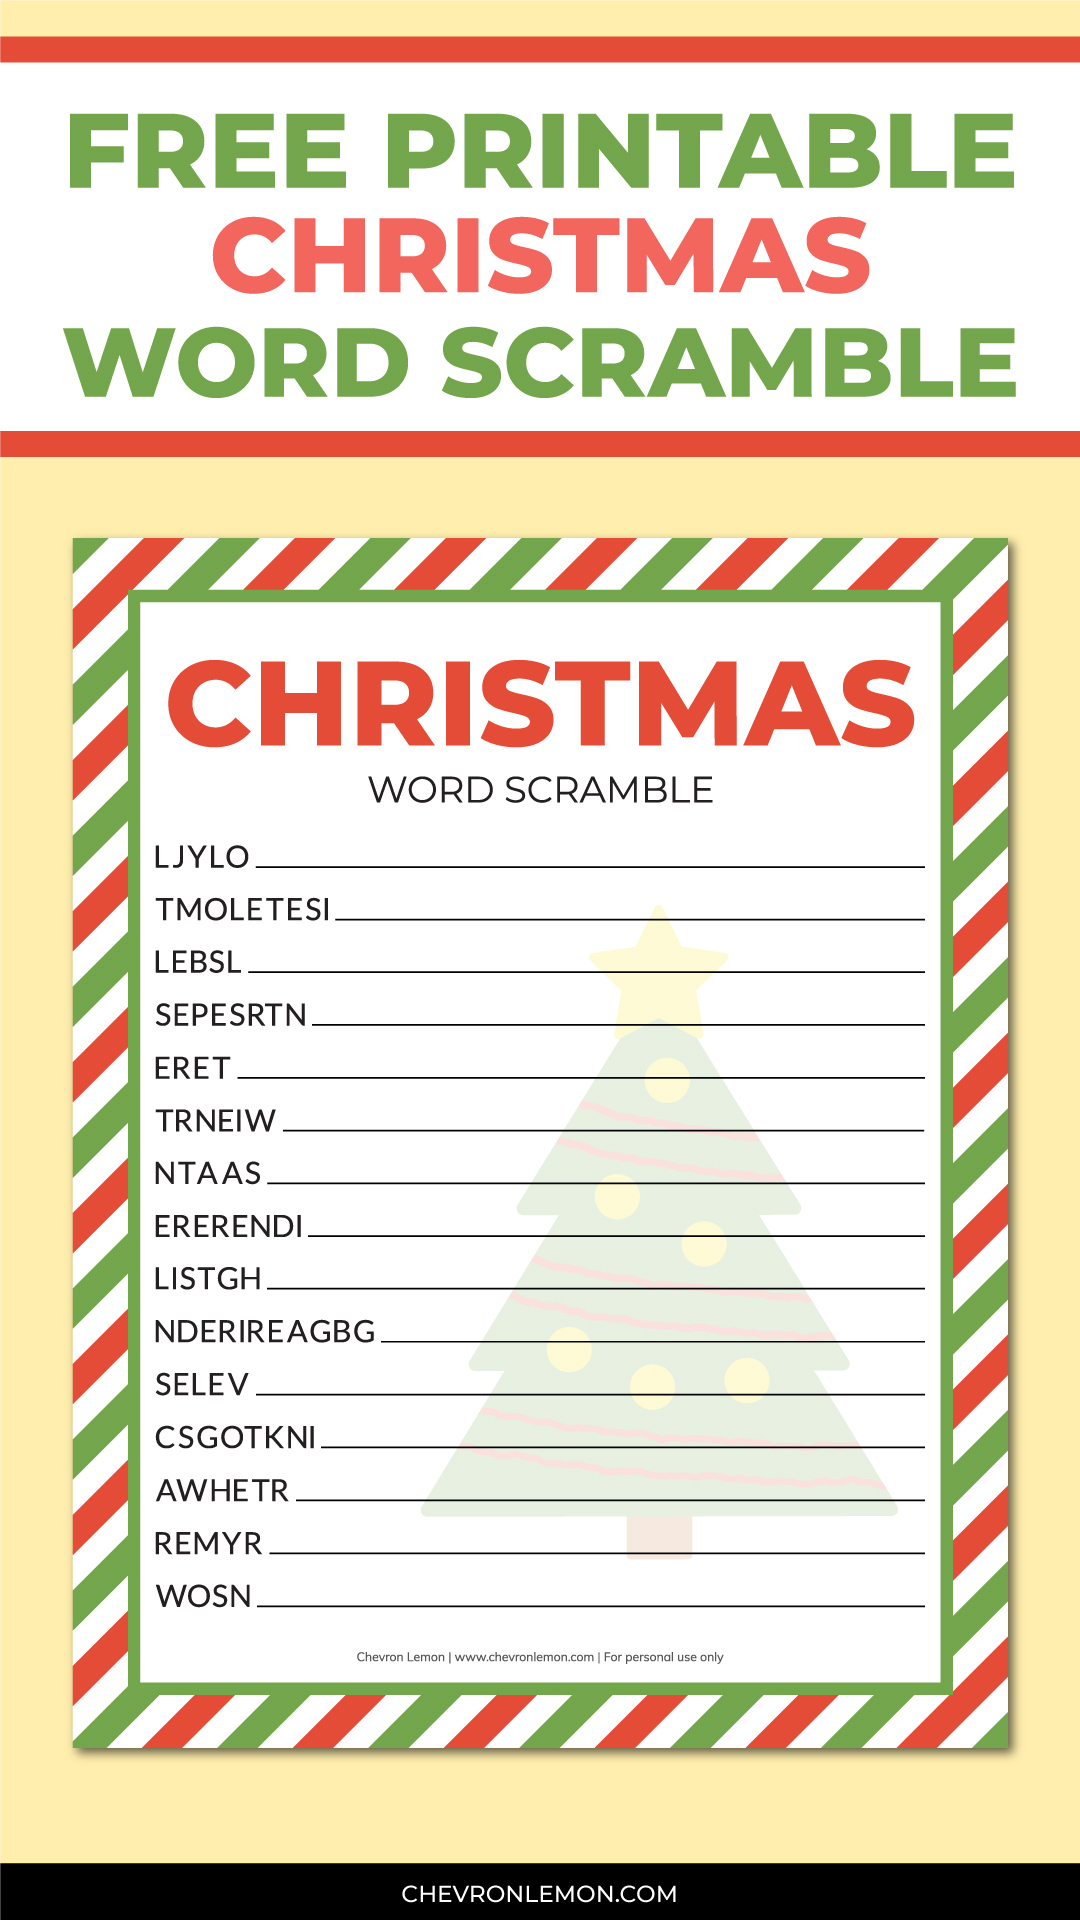 Printable Christmas word scramble - Chevron Lemon